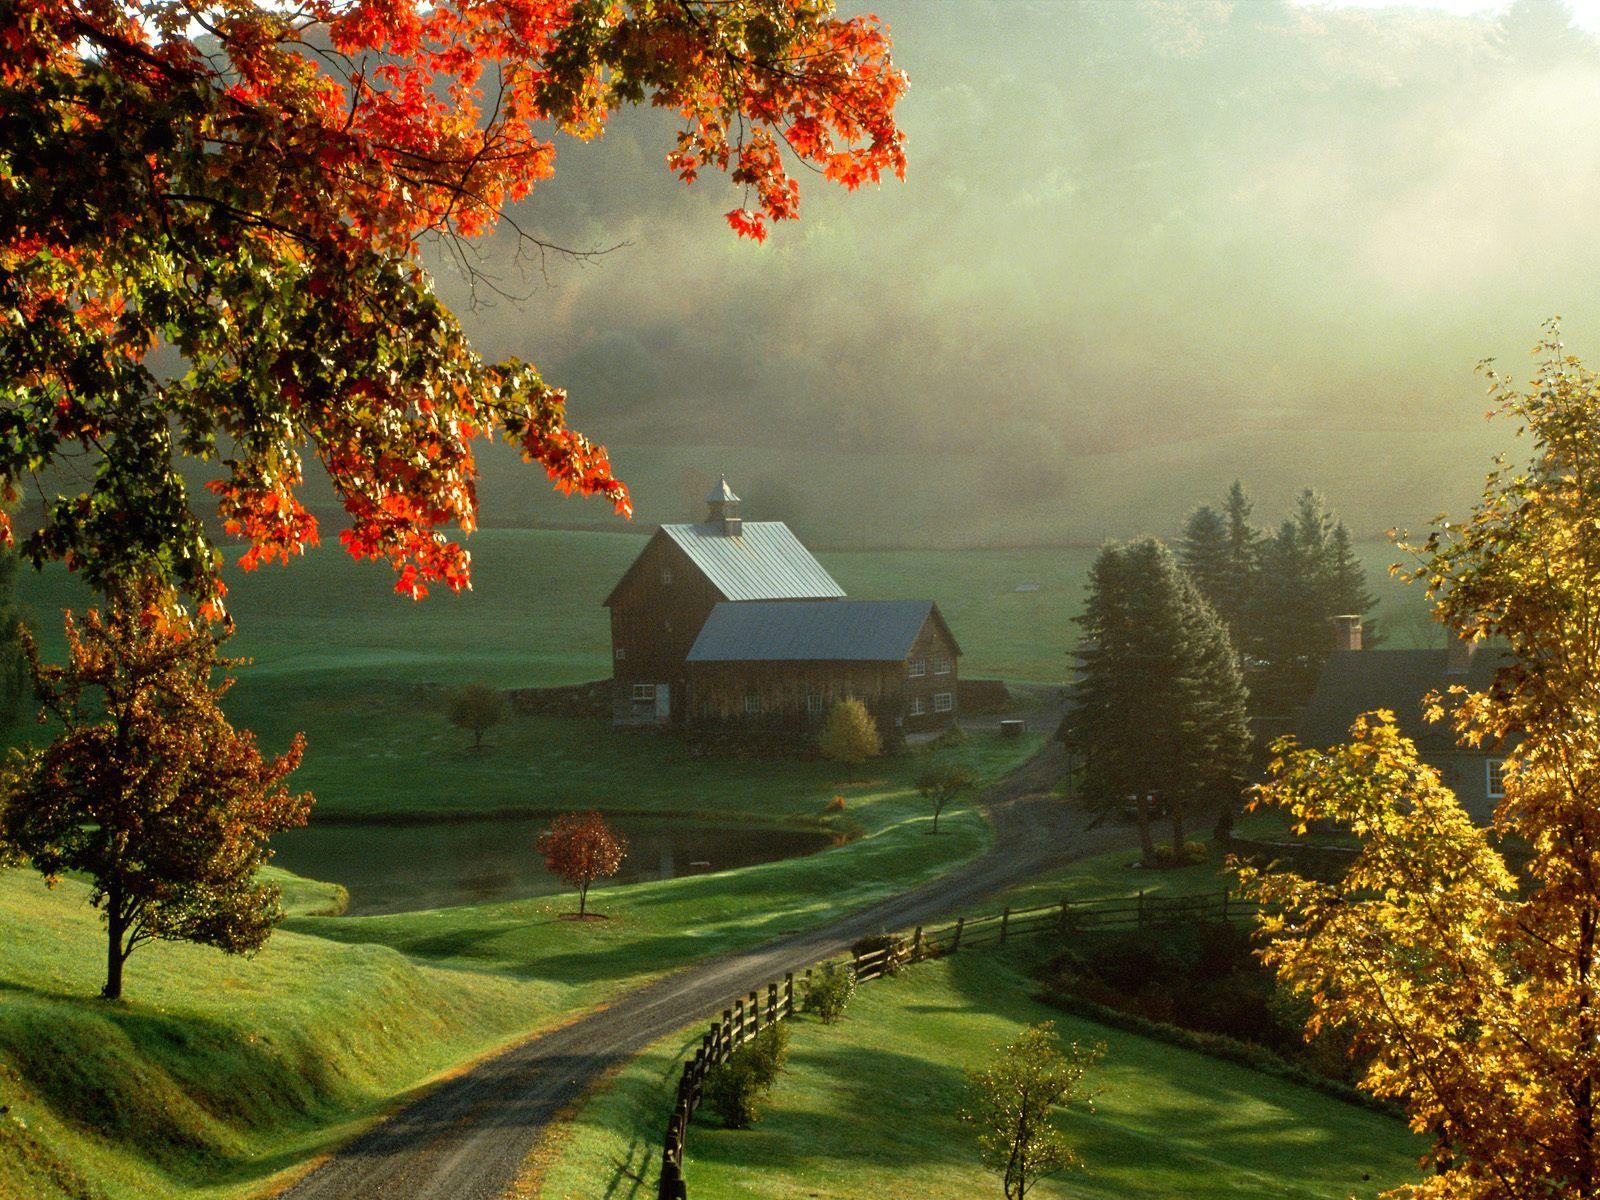 Architecture Wallpaper: Farms Wallpaper. Autumn wallpaper hd, Nature picture, Beautiful places nature